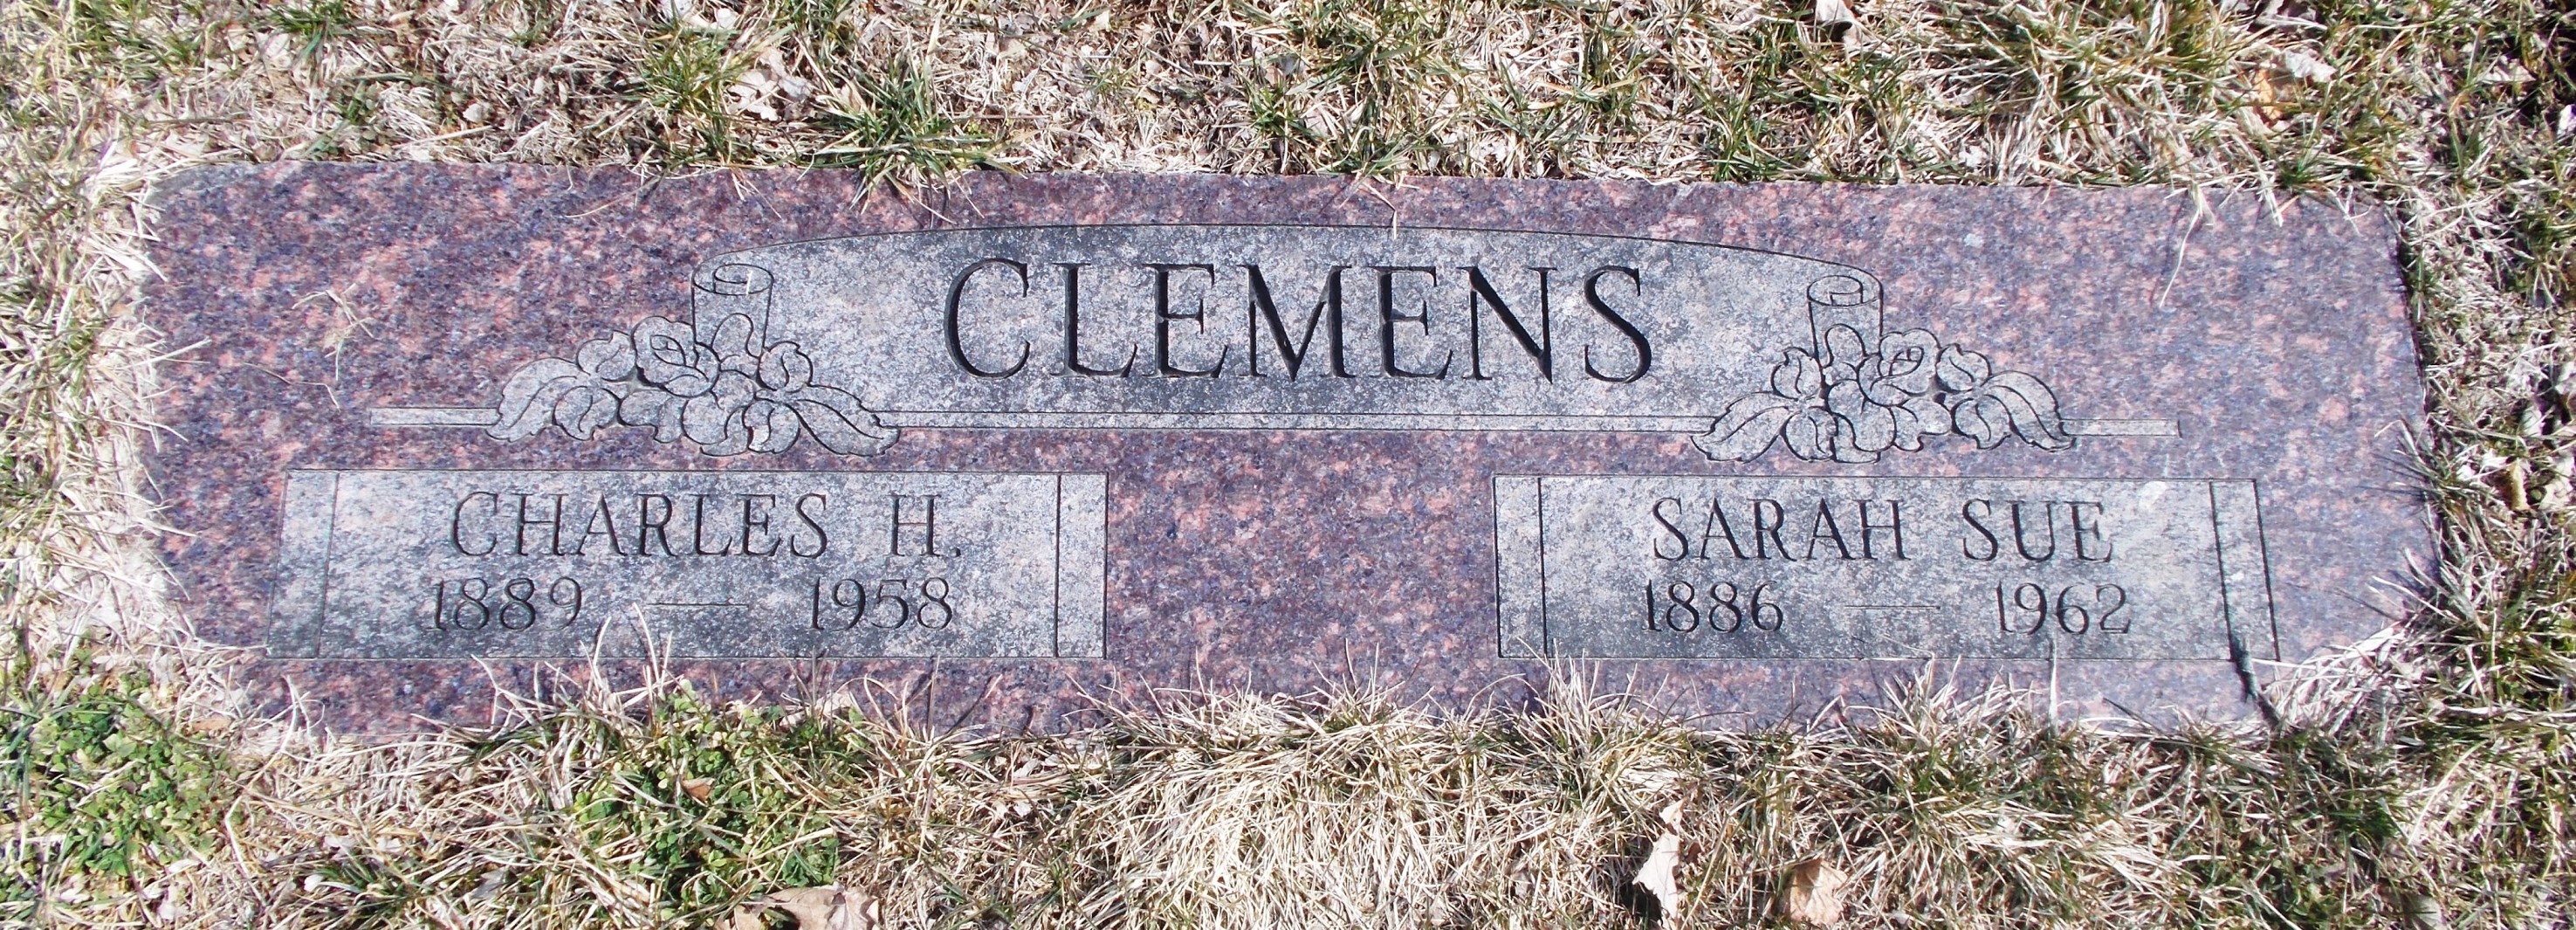 Charles H Clemens